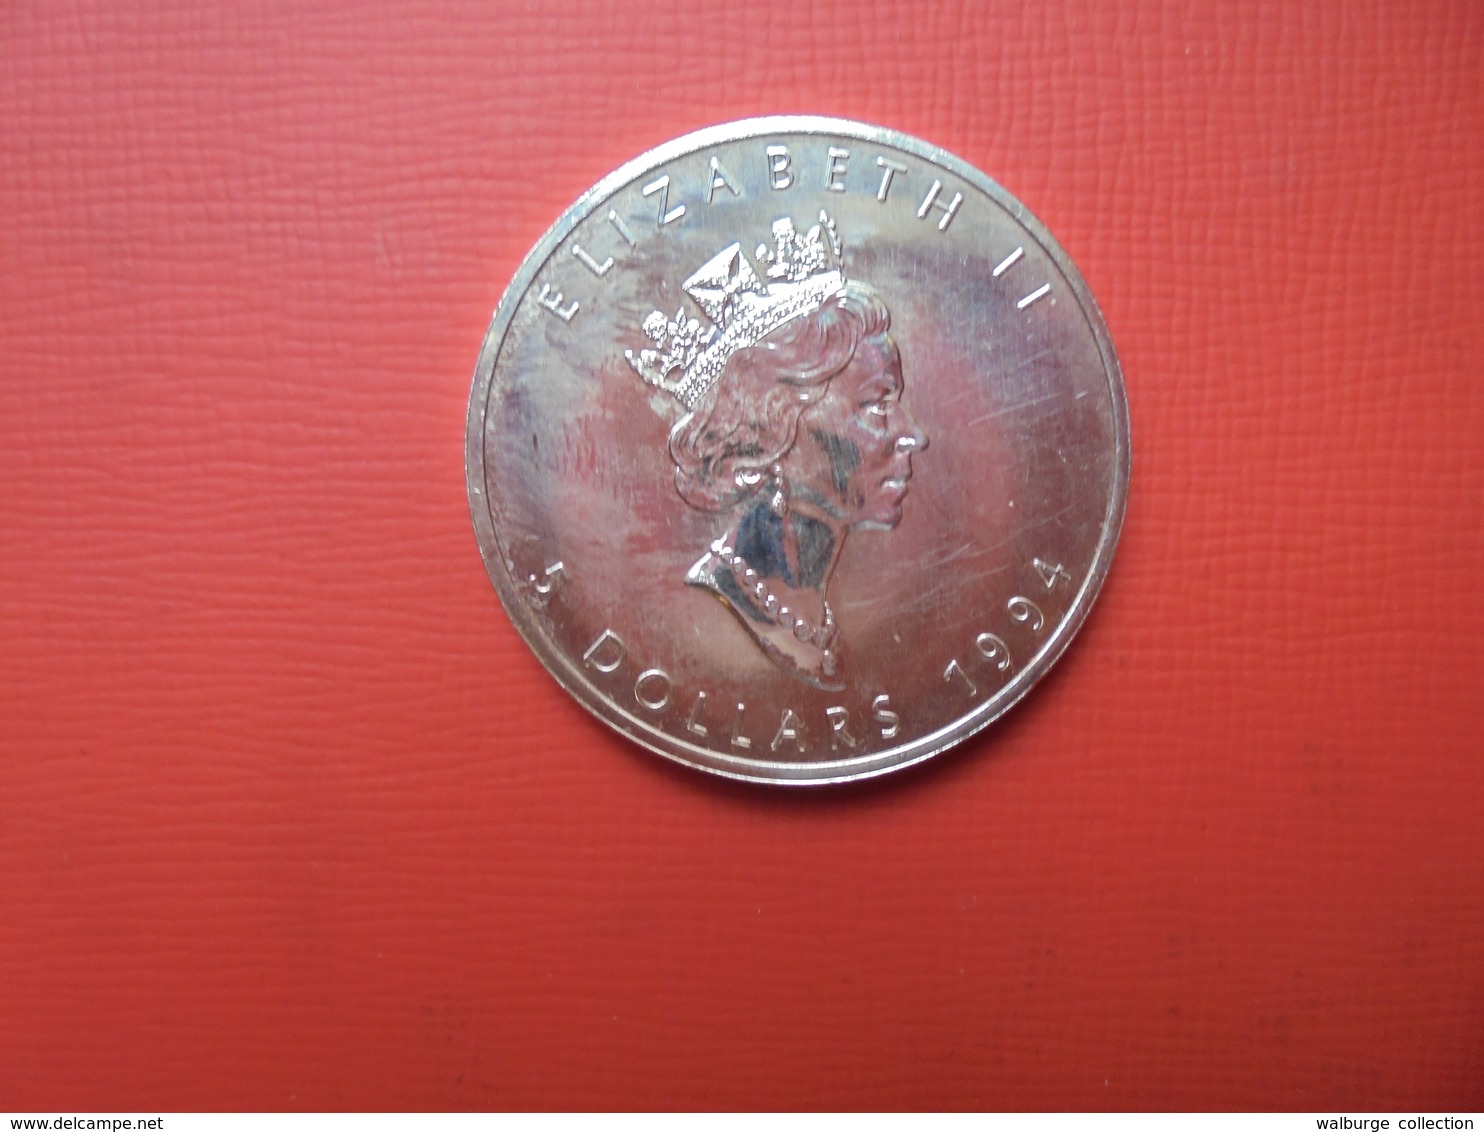 CANADA 5 $ 1994 ARGENT PUR(1 OUNCE)  "ERABLE" - Canada